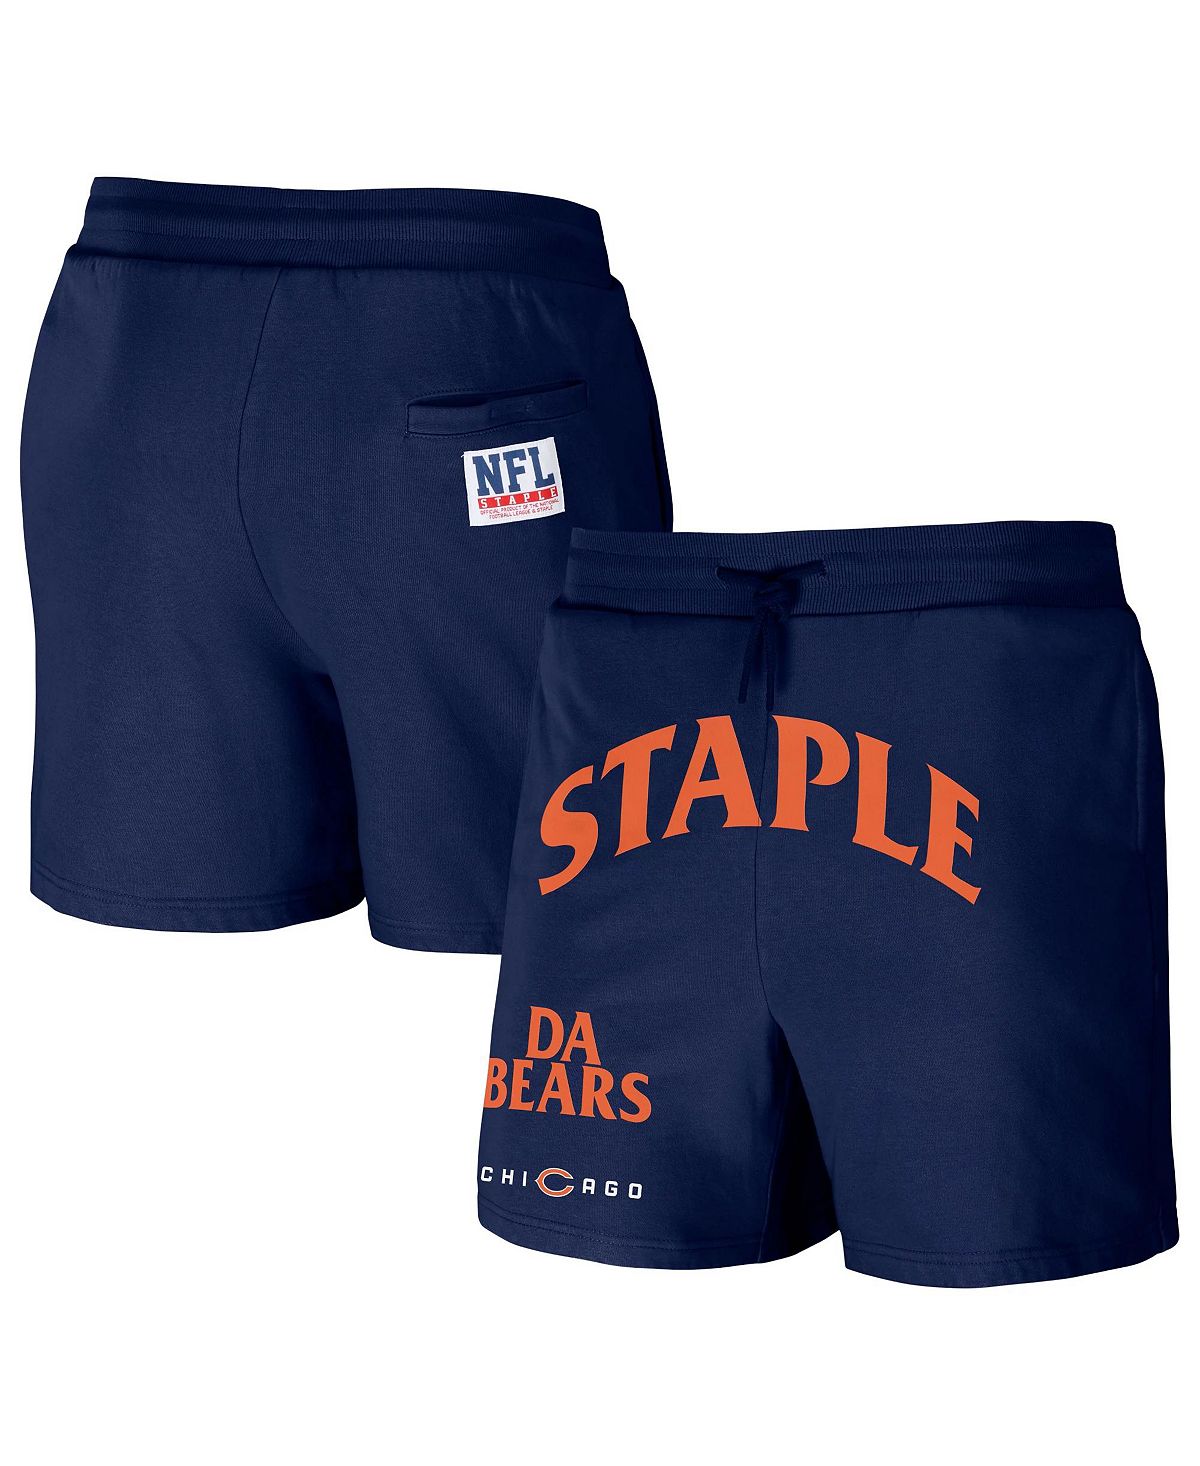 Мужские флисовые шорты nfl x staple navy chicago bears new age throwback vintage-like NFL Properties, синий